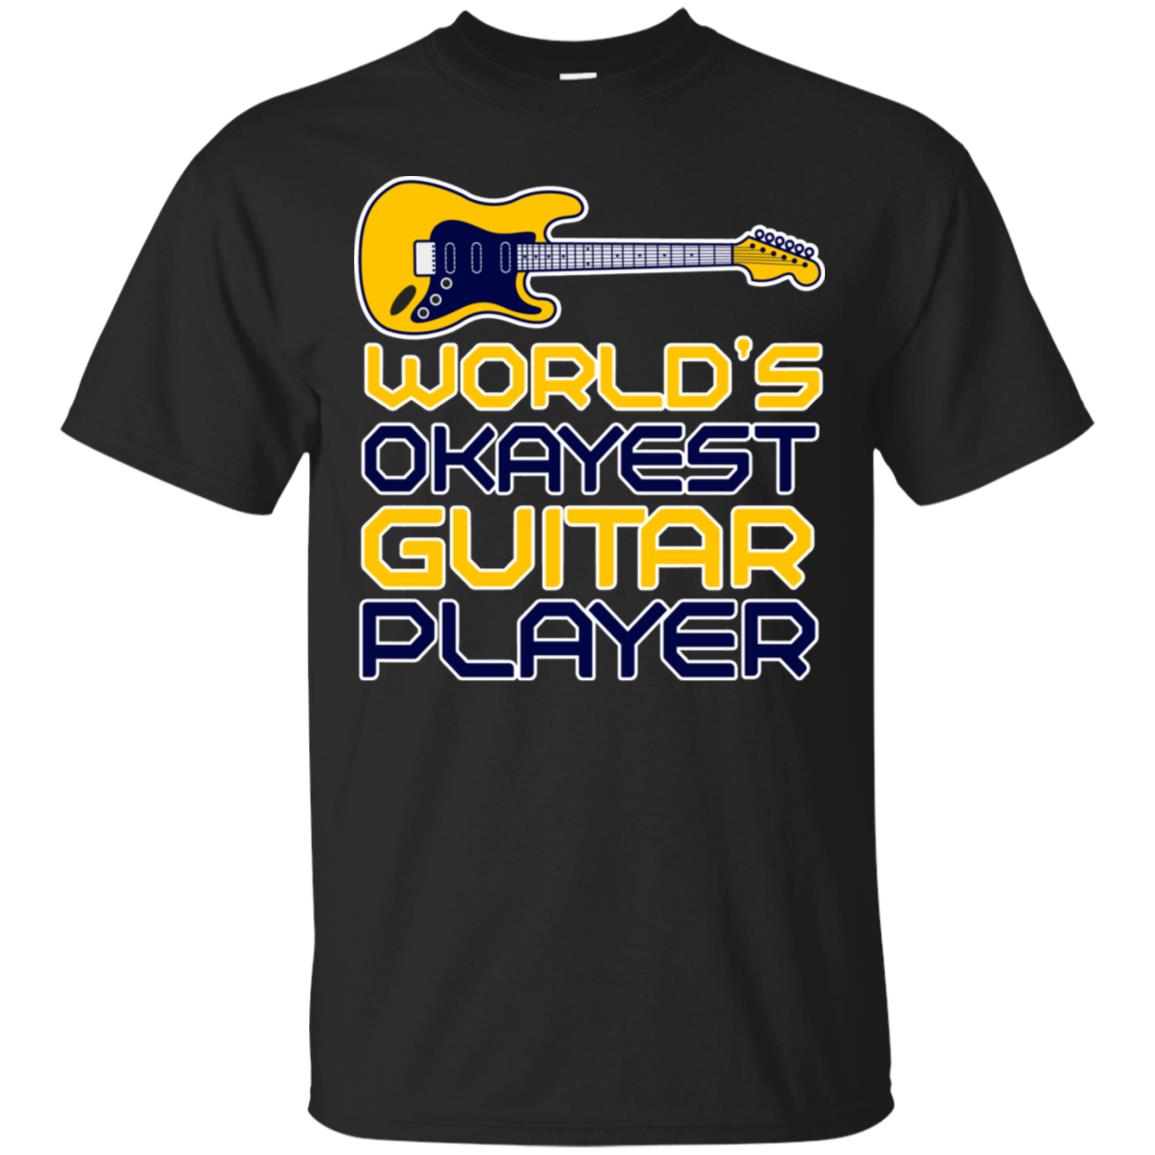 World's Okayest Guitar Player Gift Shirt For GuitaristG200 Gildan Ultra Cotton T-Shirt